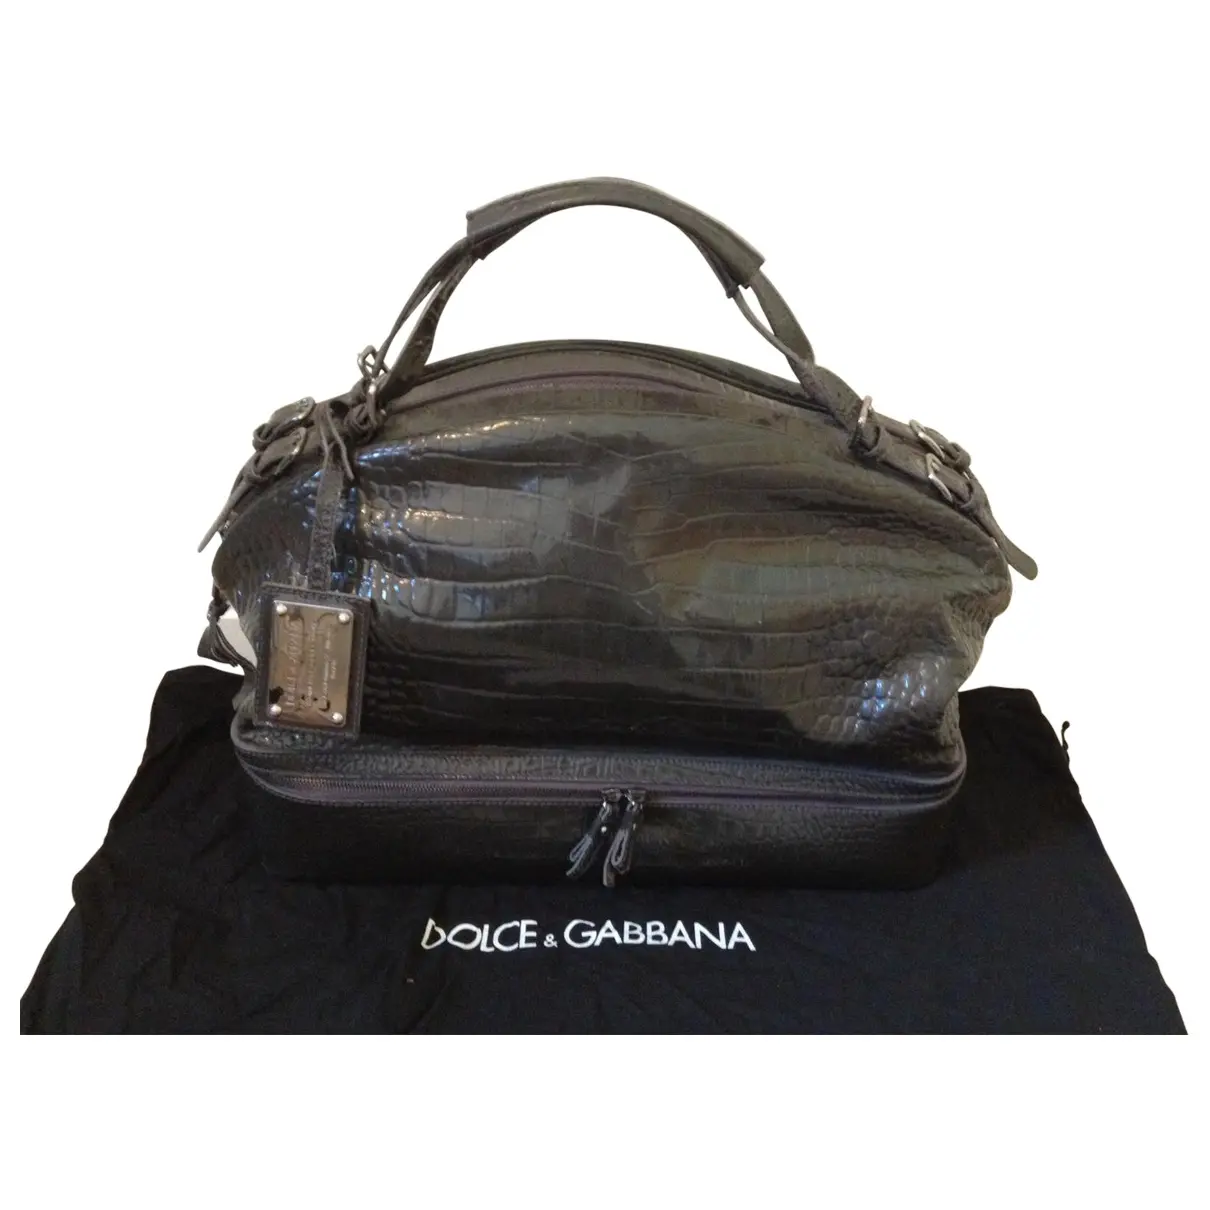 Grey Patent leather Travel bag Dolce & Gabbana